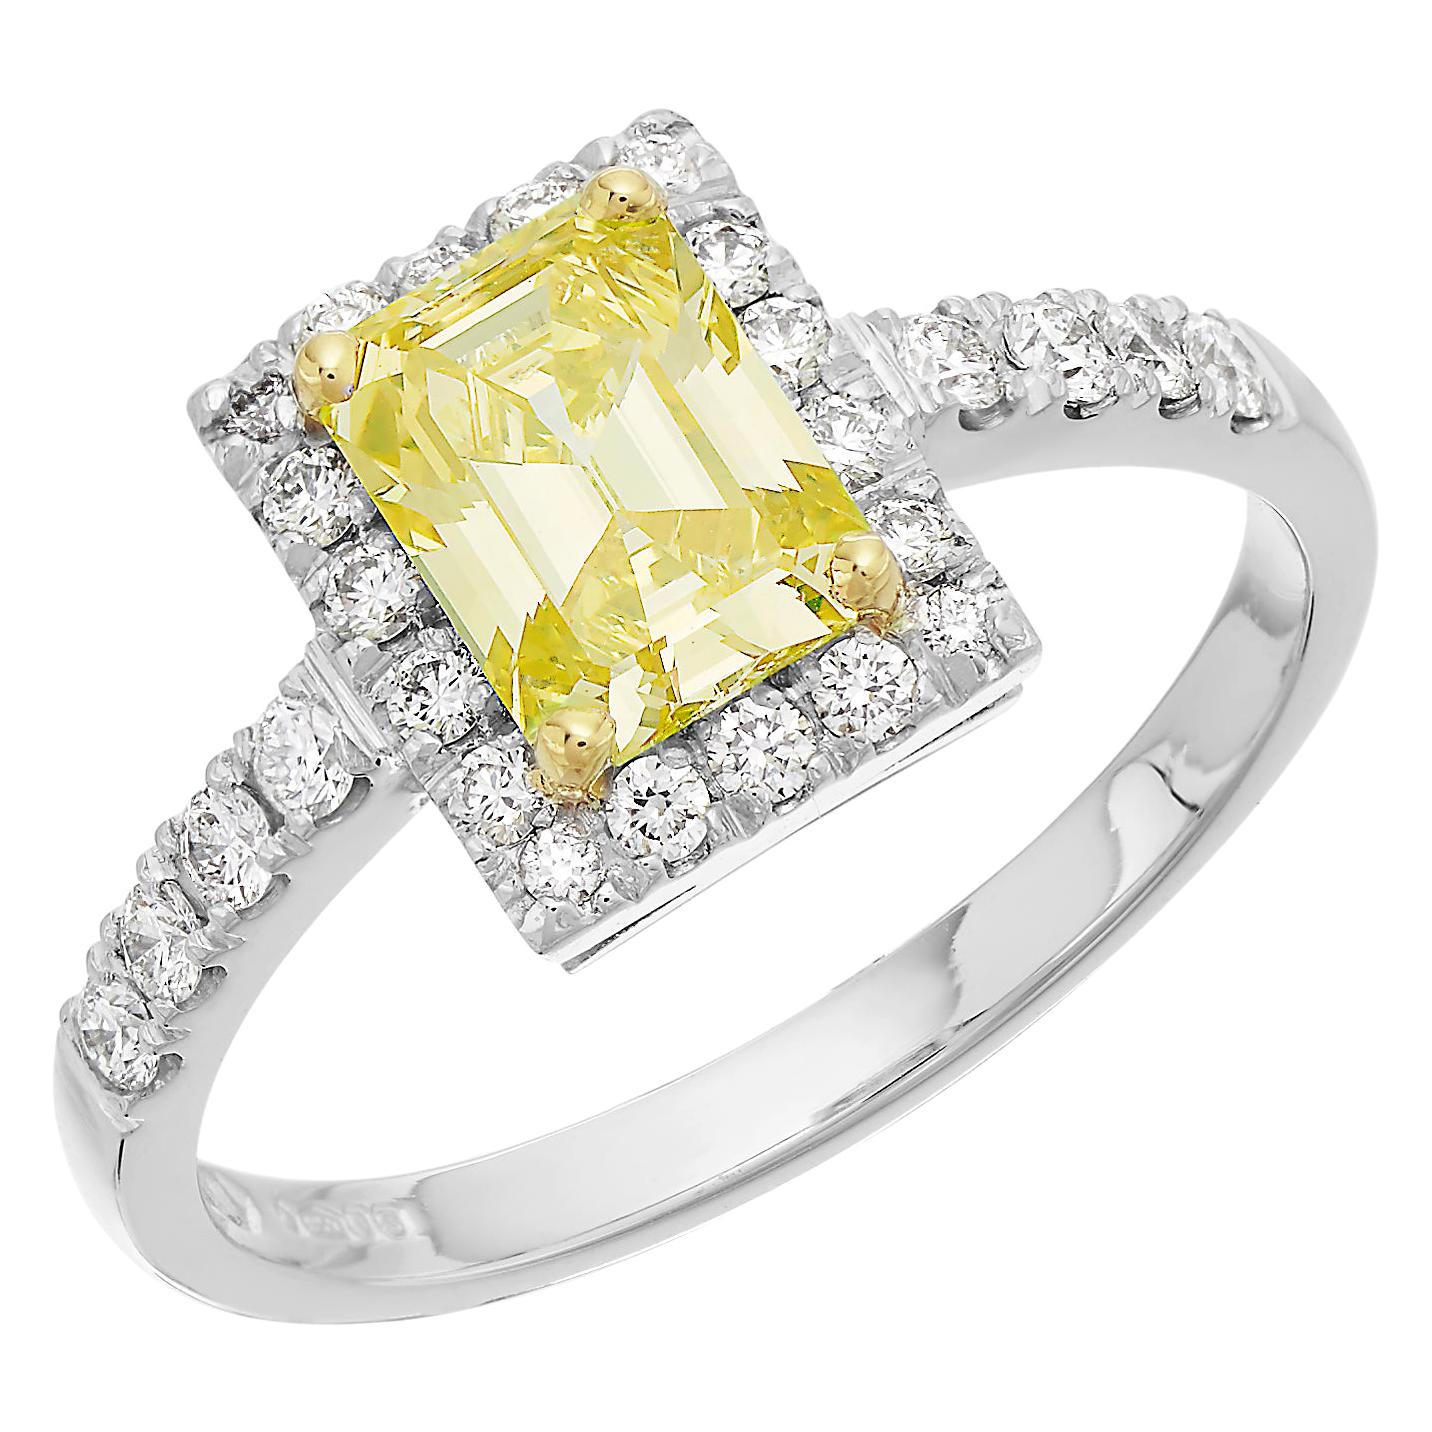 GCS Certified 1.05 ct Fancy Intense Yellow Diamond, Emerald Cut Ring in Platinum